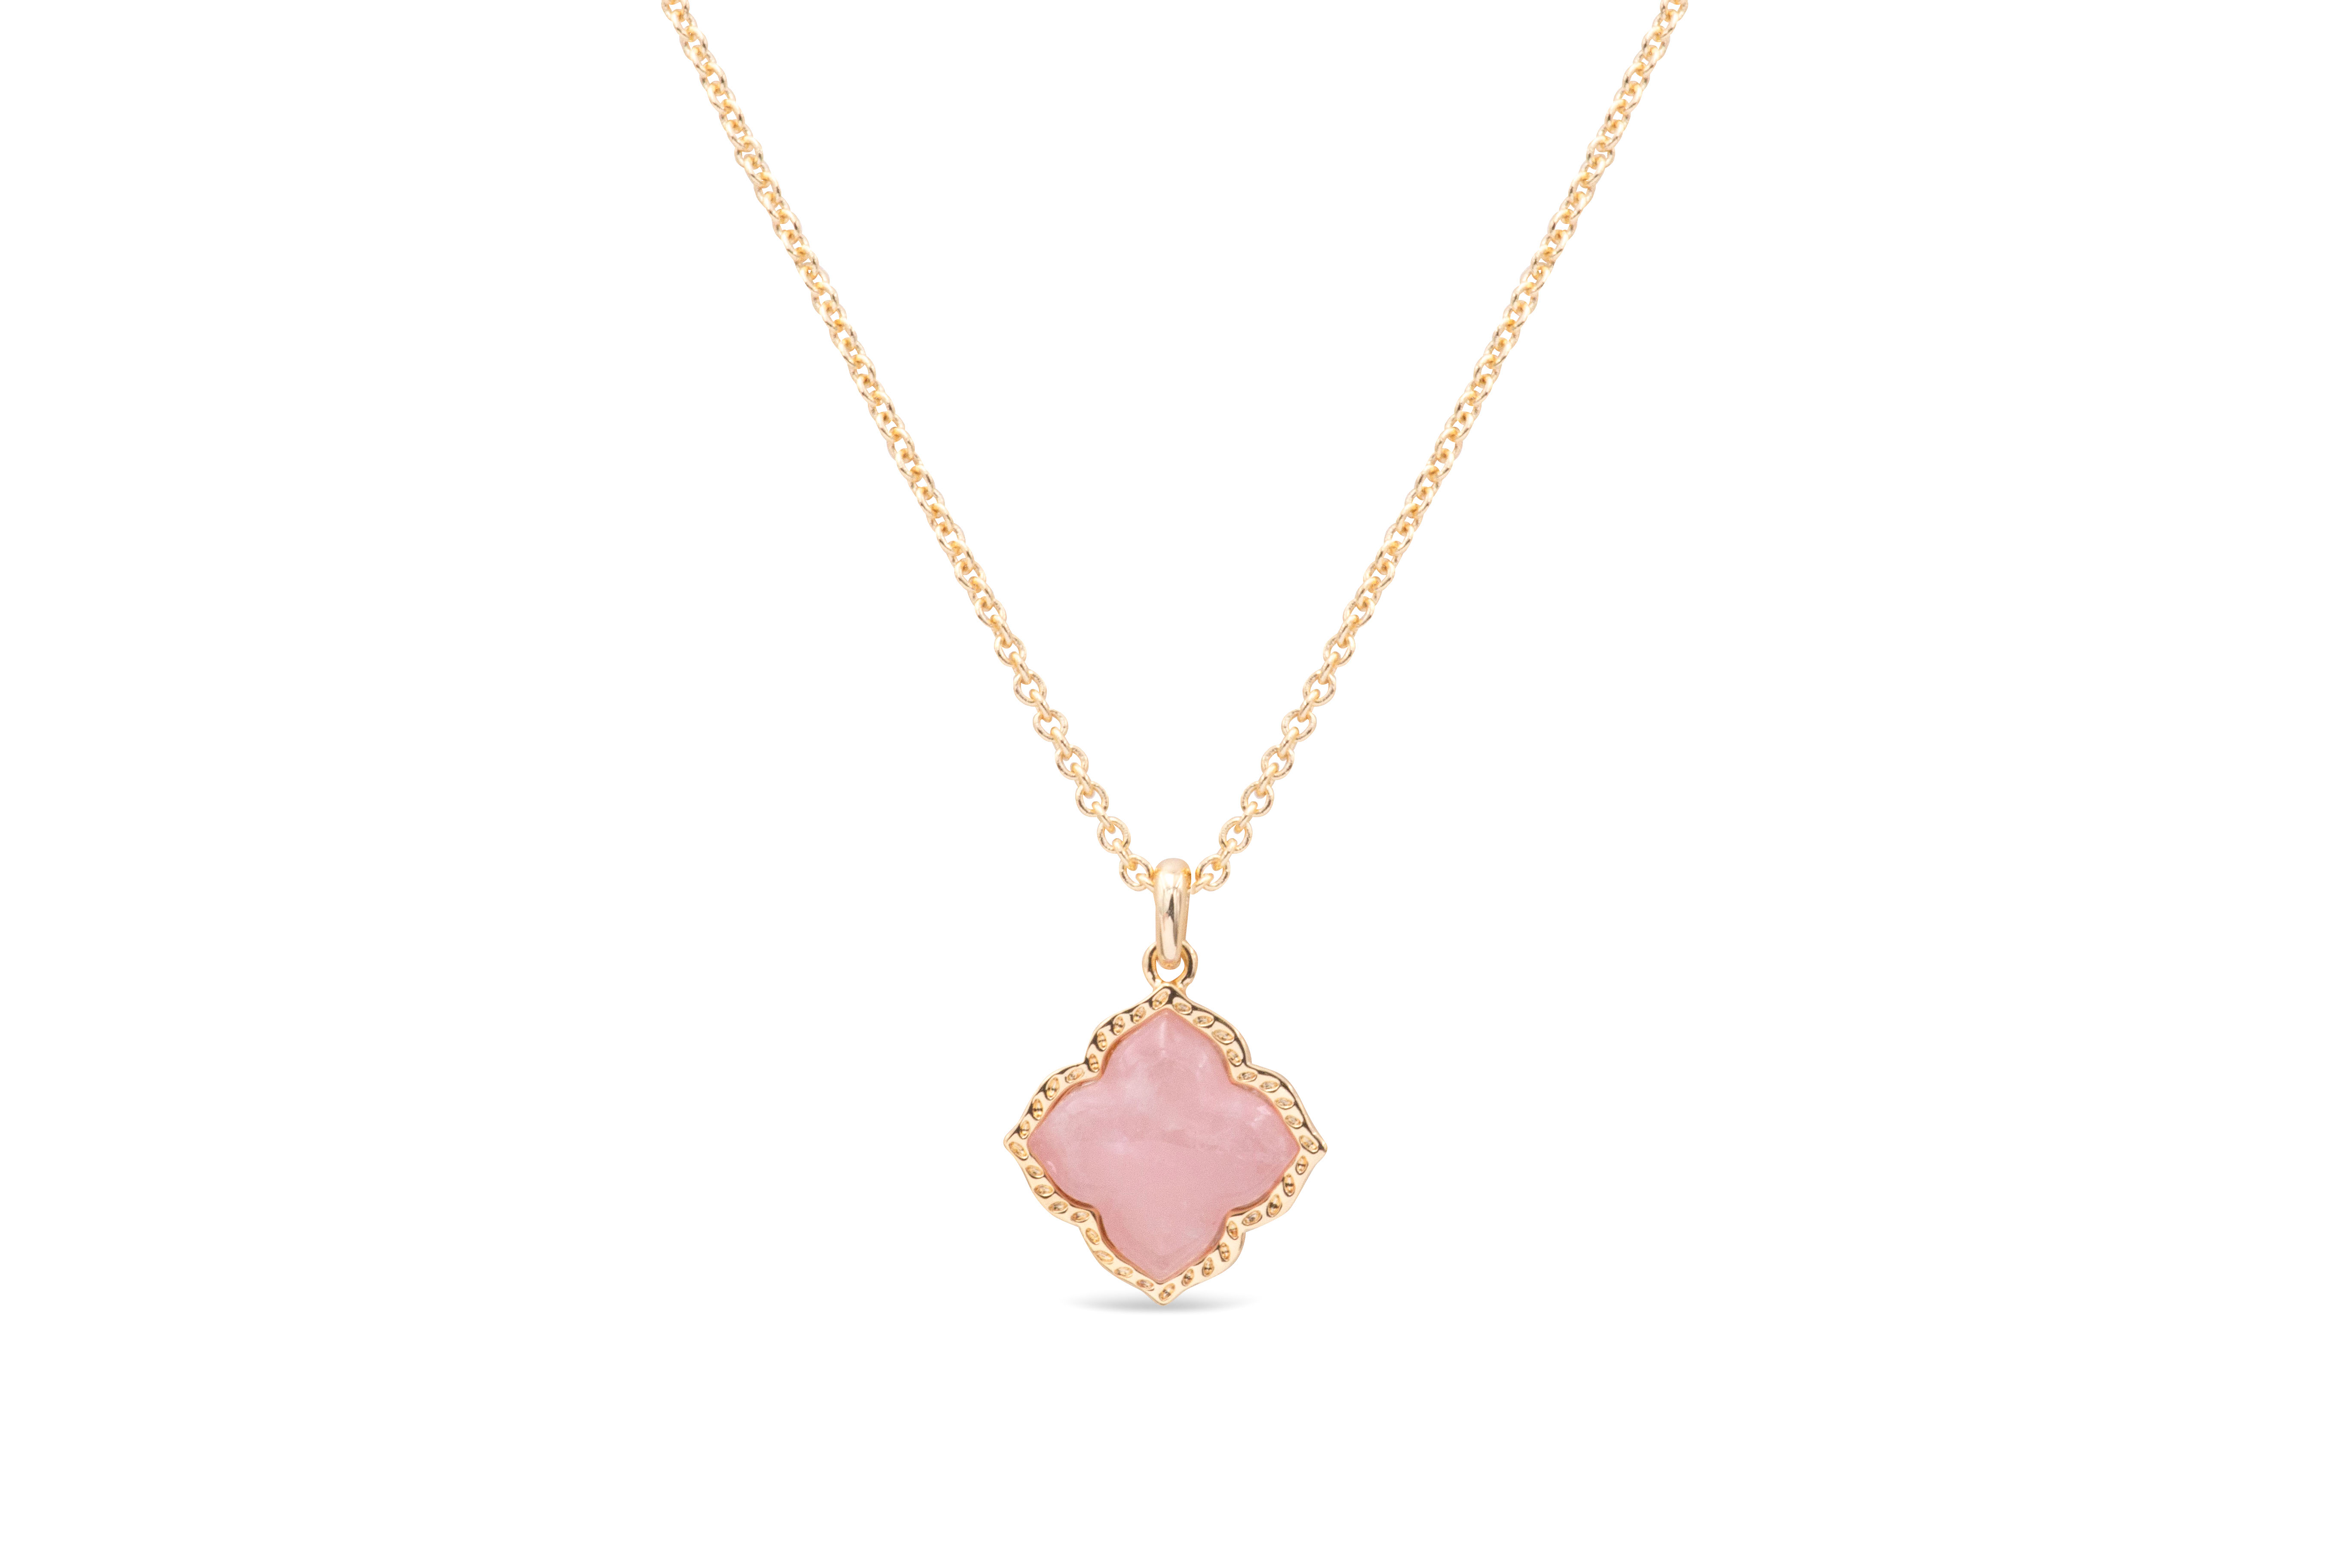 Kendra Scott Mallory Gold Pendant Necklace in Rose Quartz